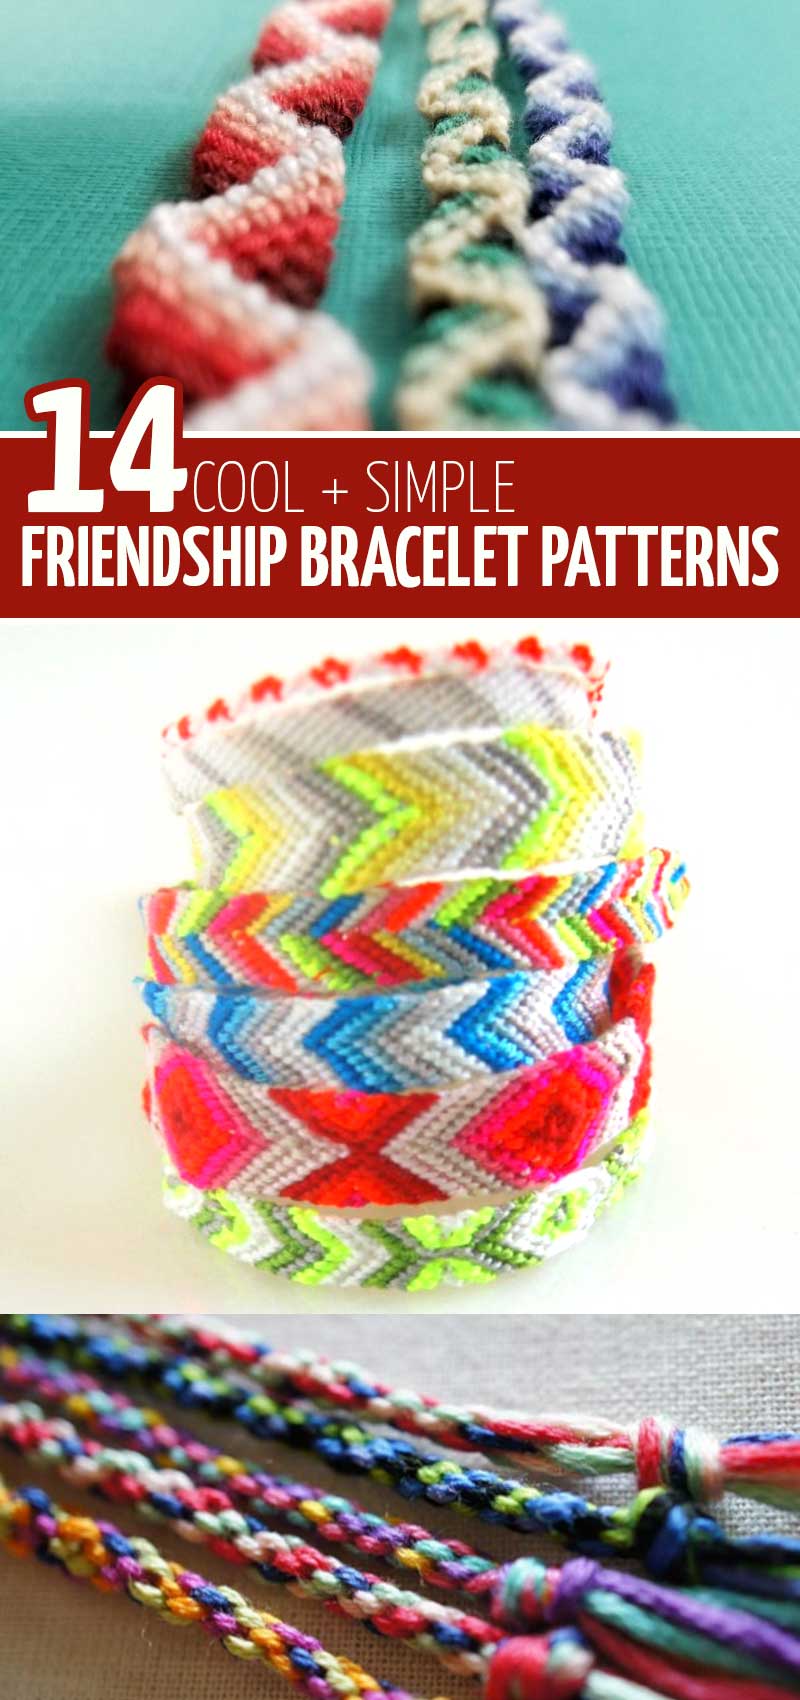 How to Make Friendship Bracelets - Infarrantly Creative